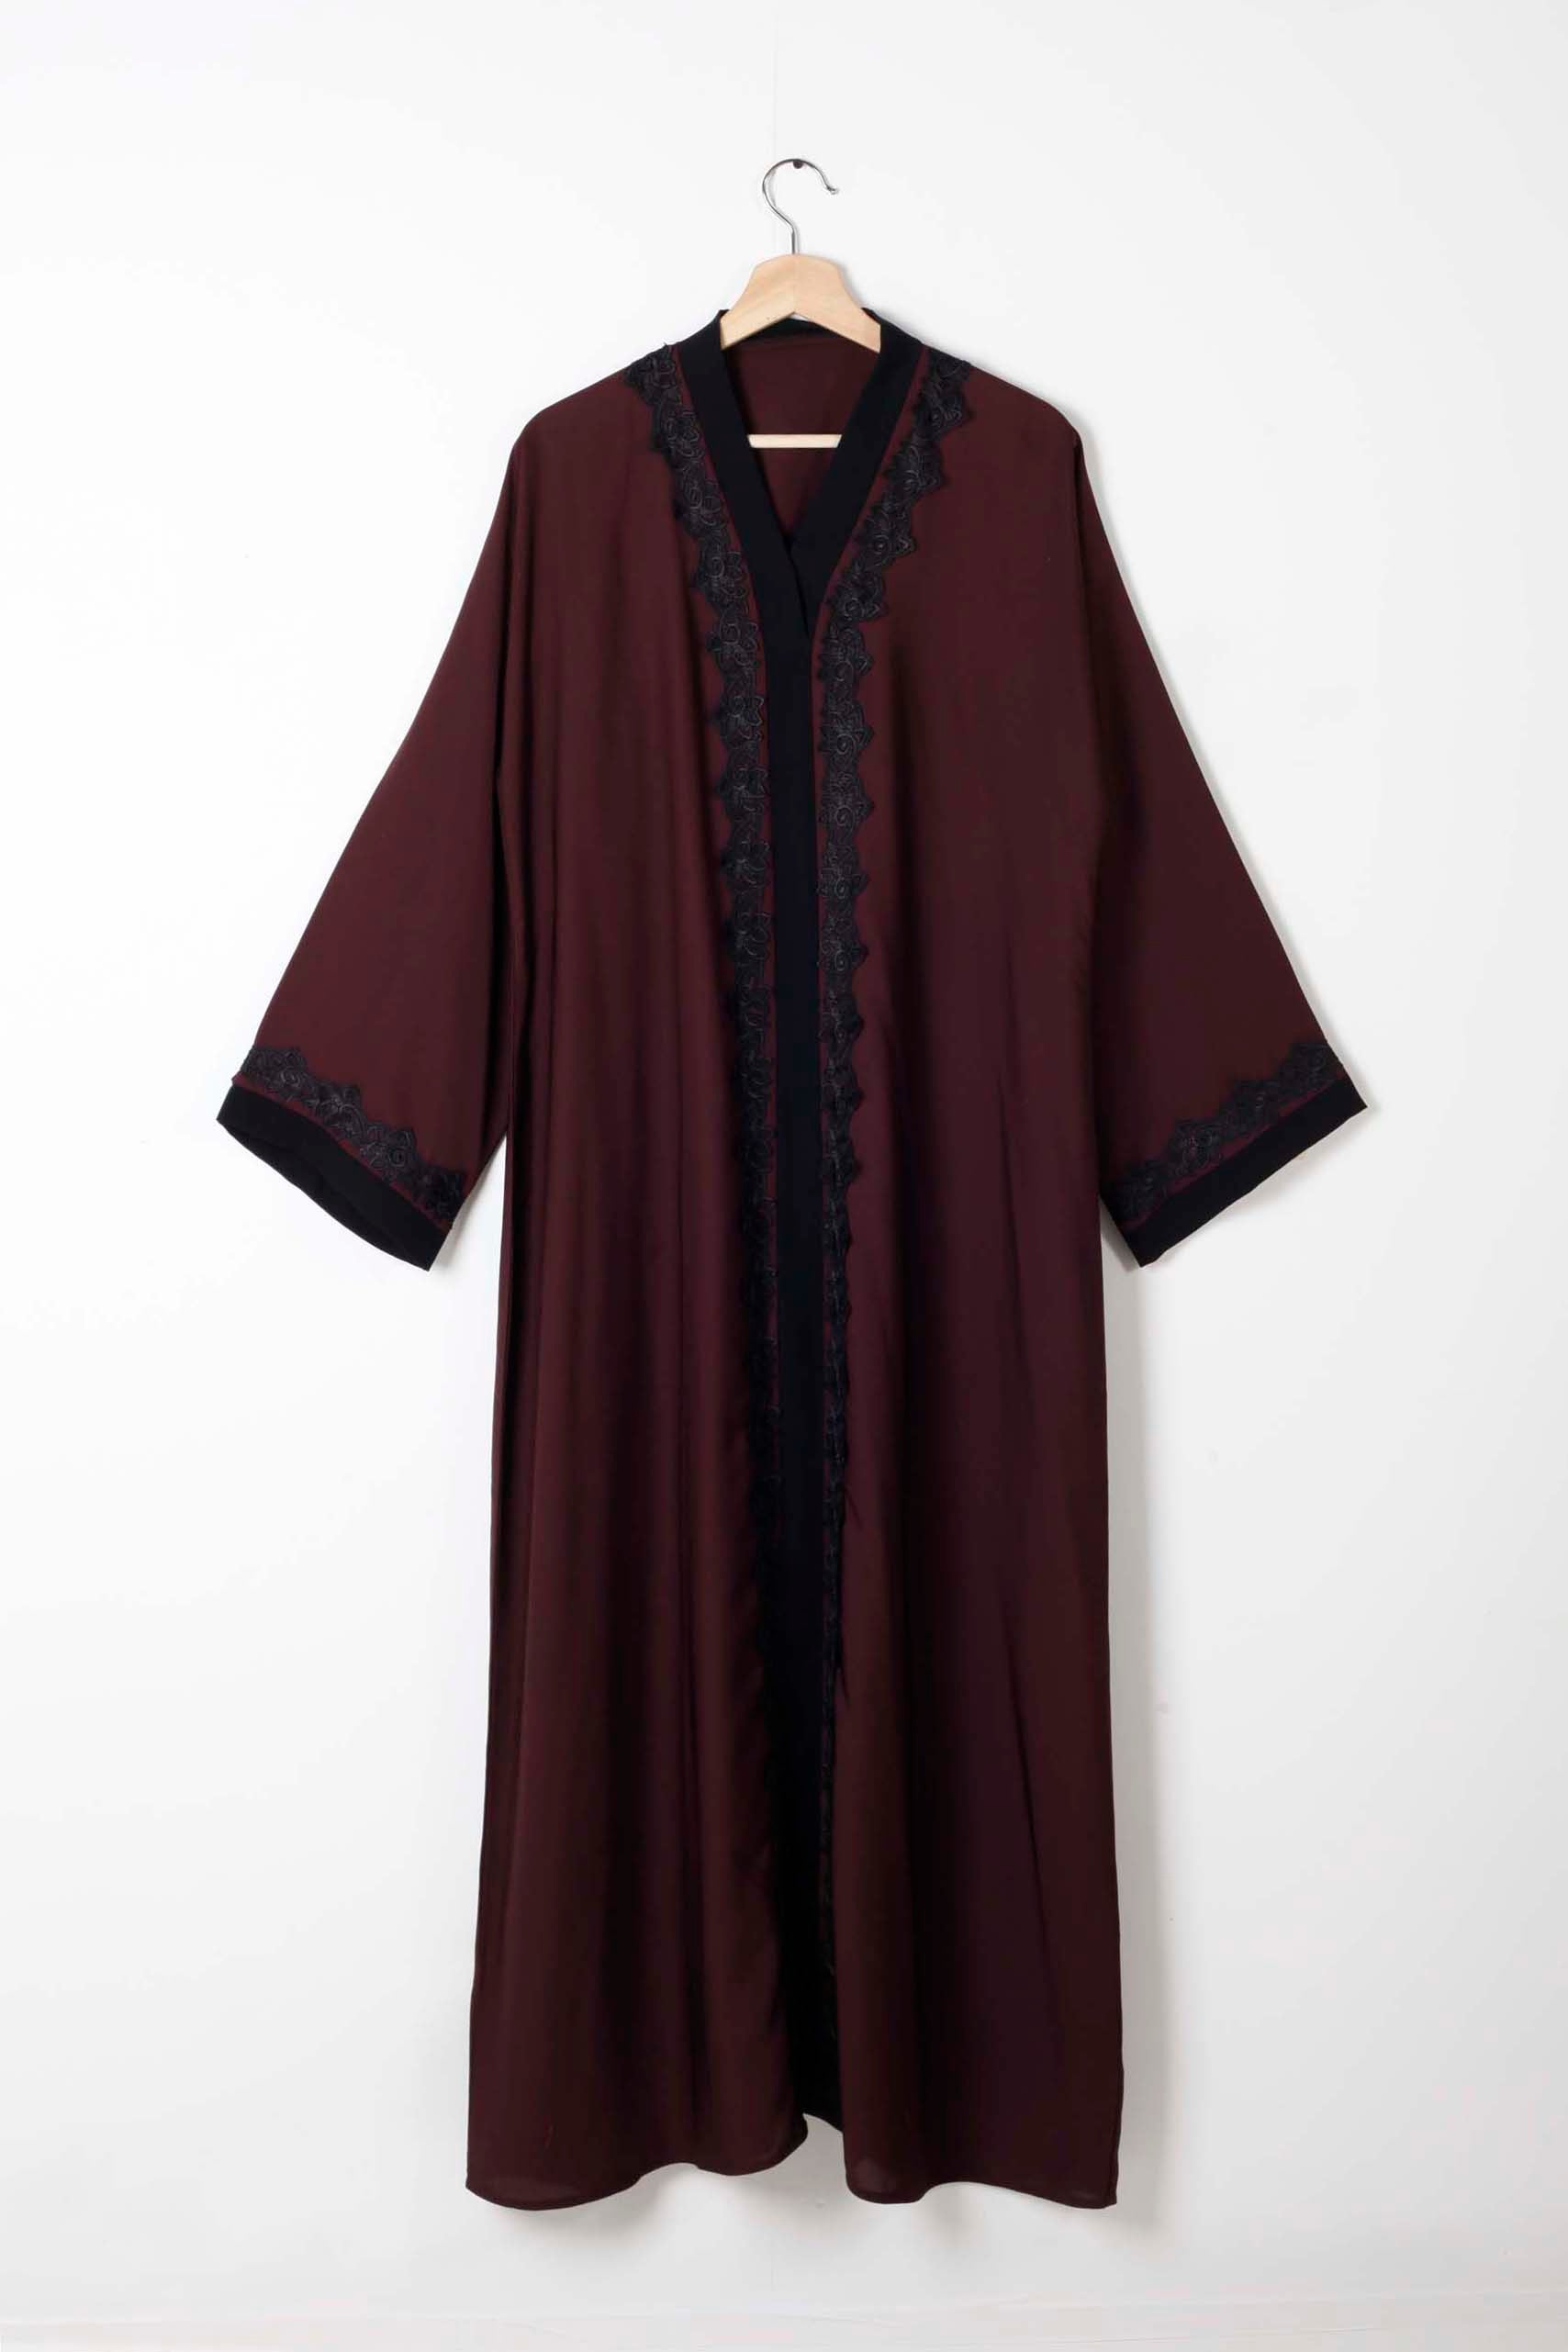 Maroon Abaya with Black Lace Detailing